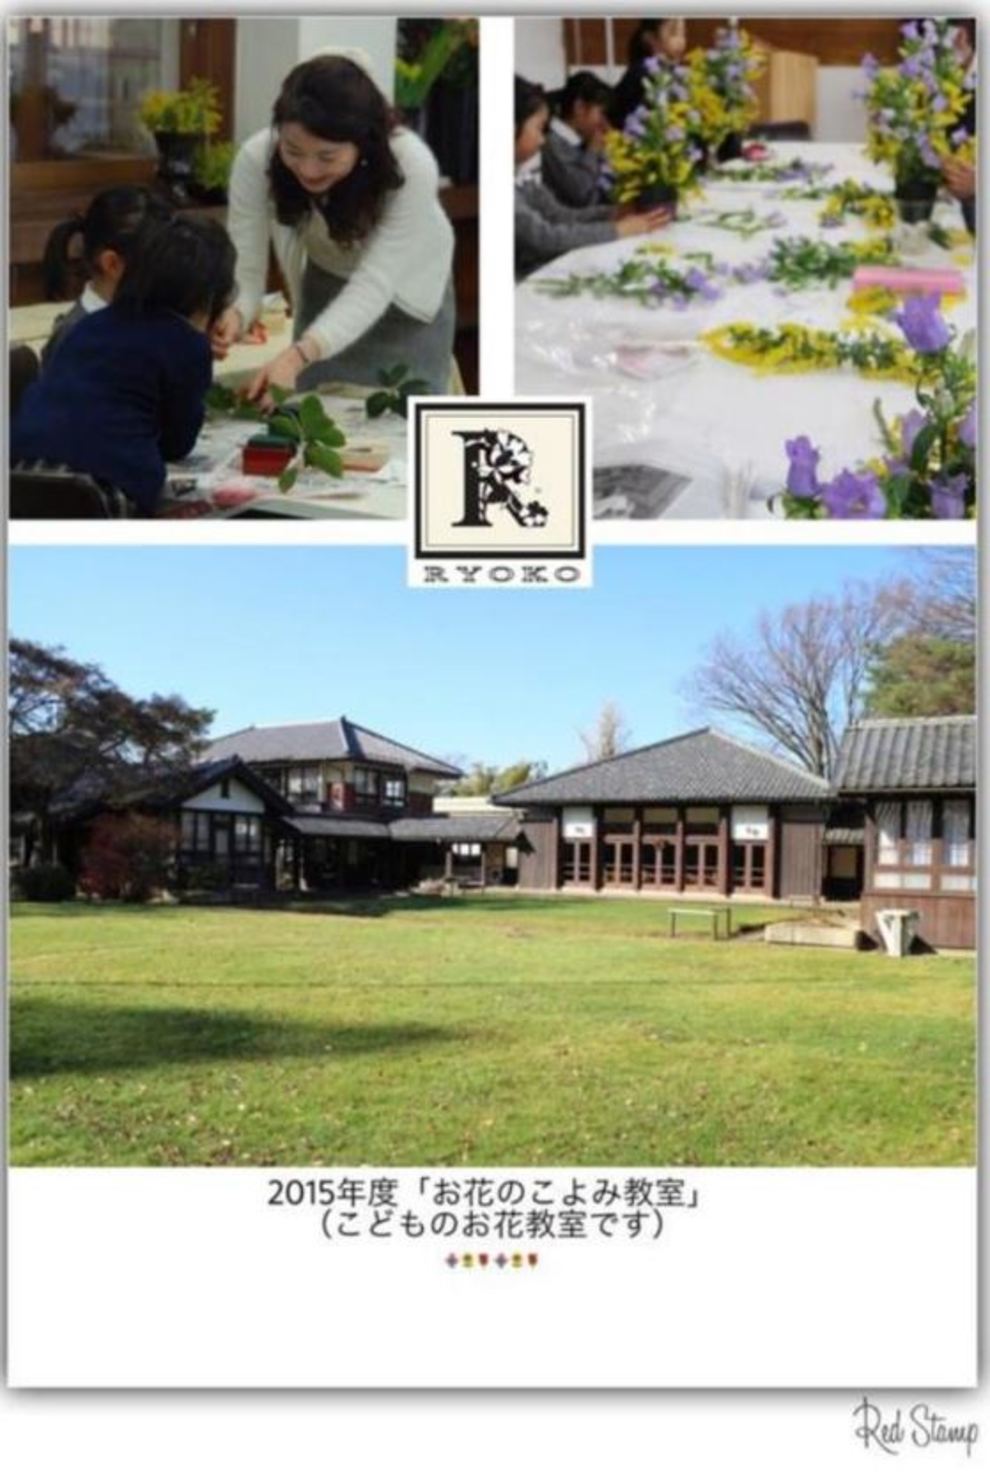 JIYUアフタースクール 2015年4月より開講講座 「お花のこよみ教室」(こどものお花とこよみのお教室です)